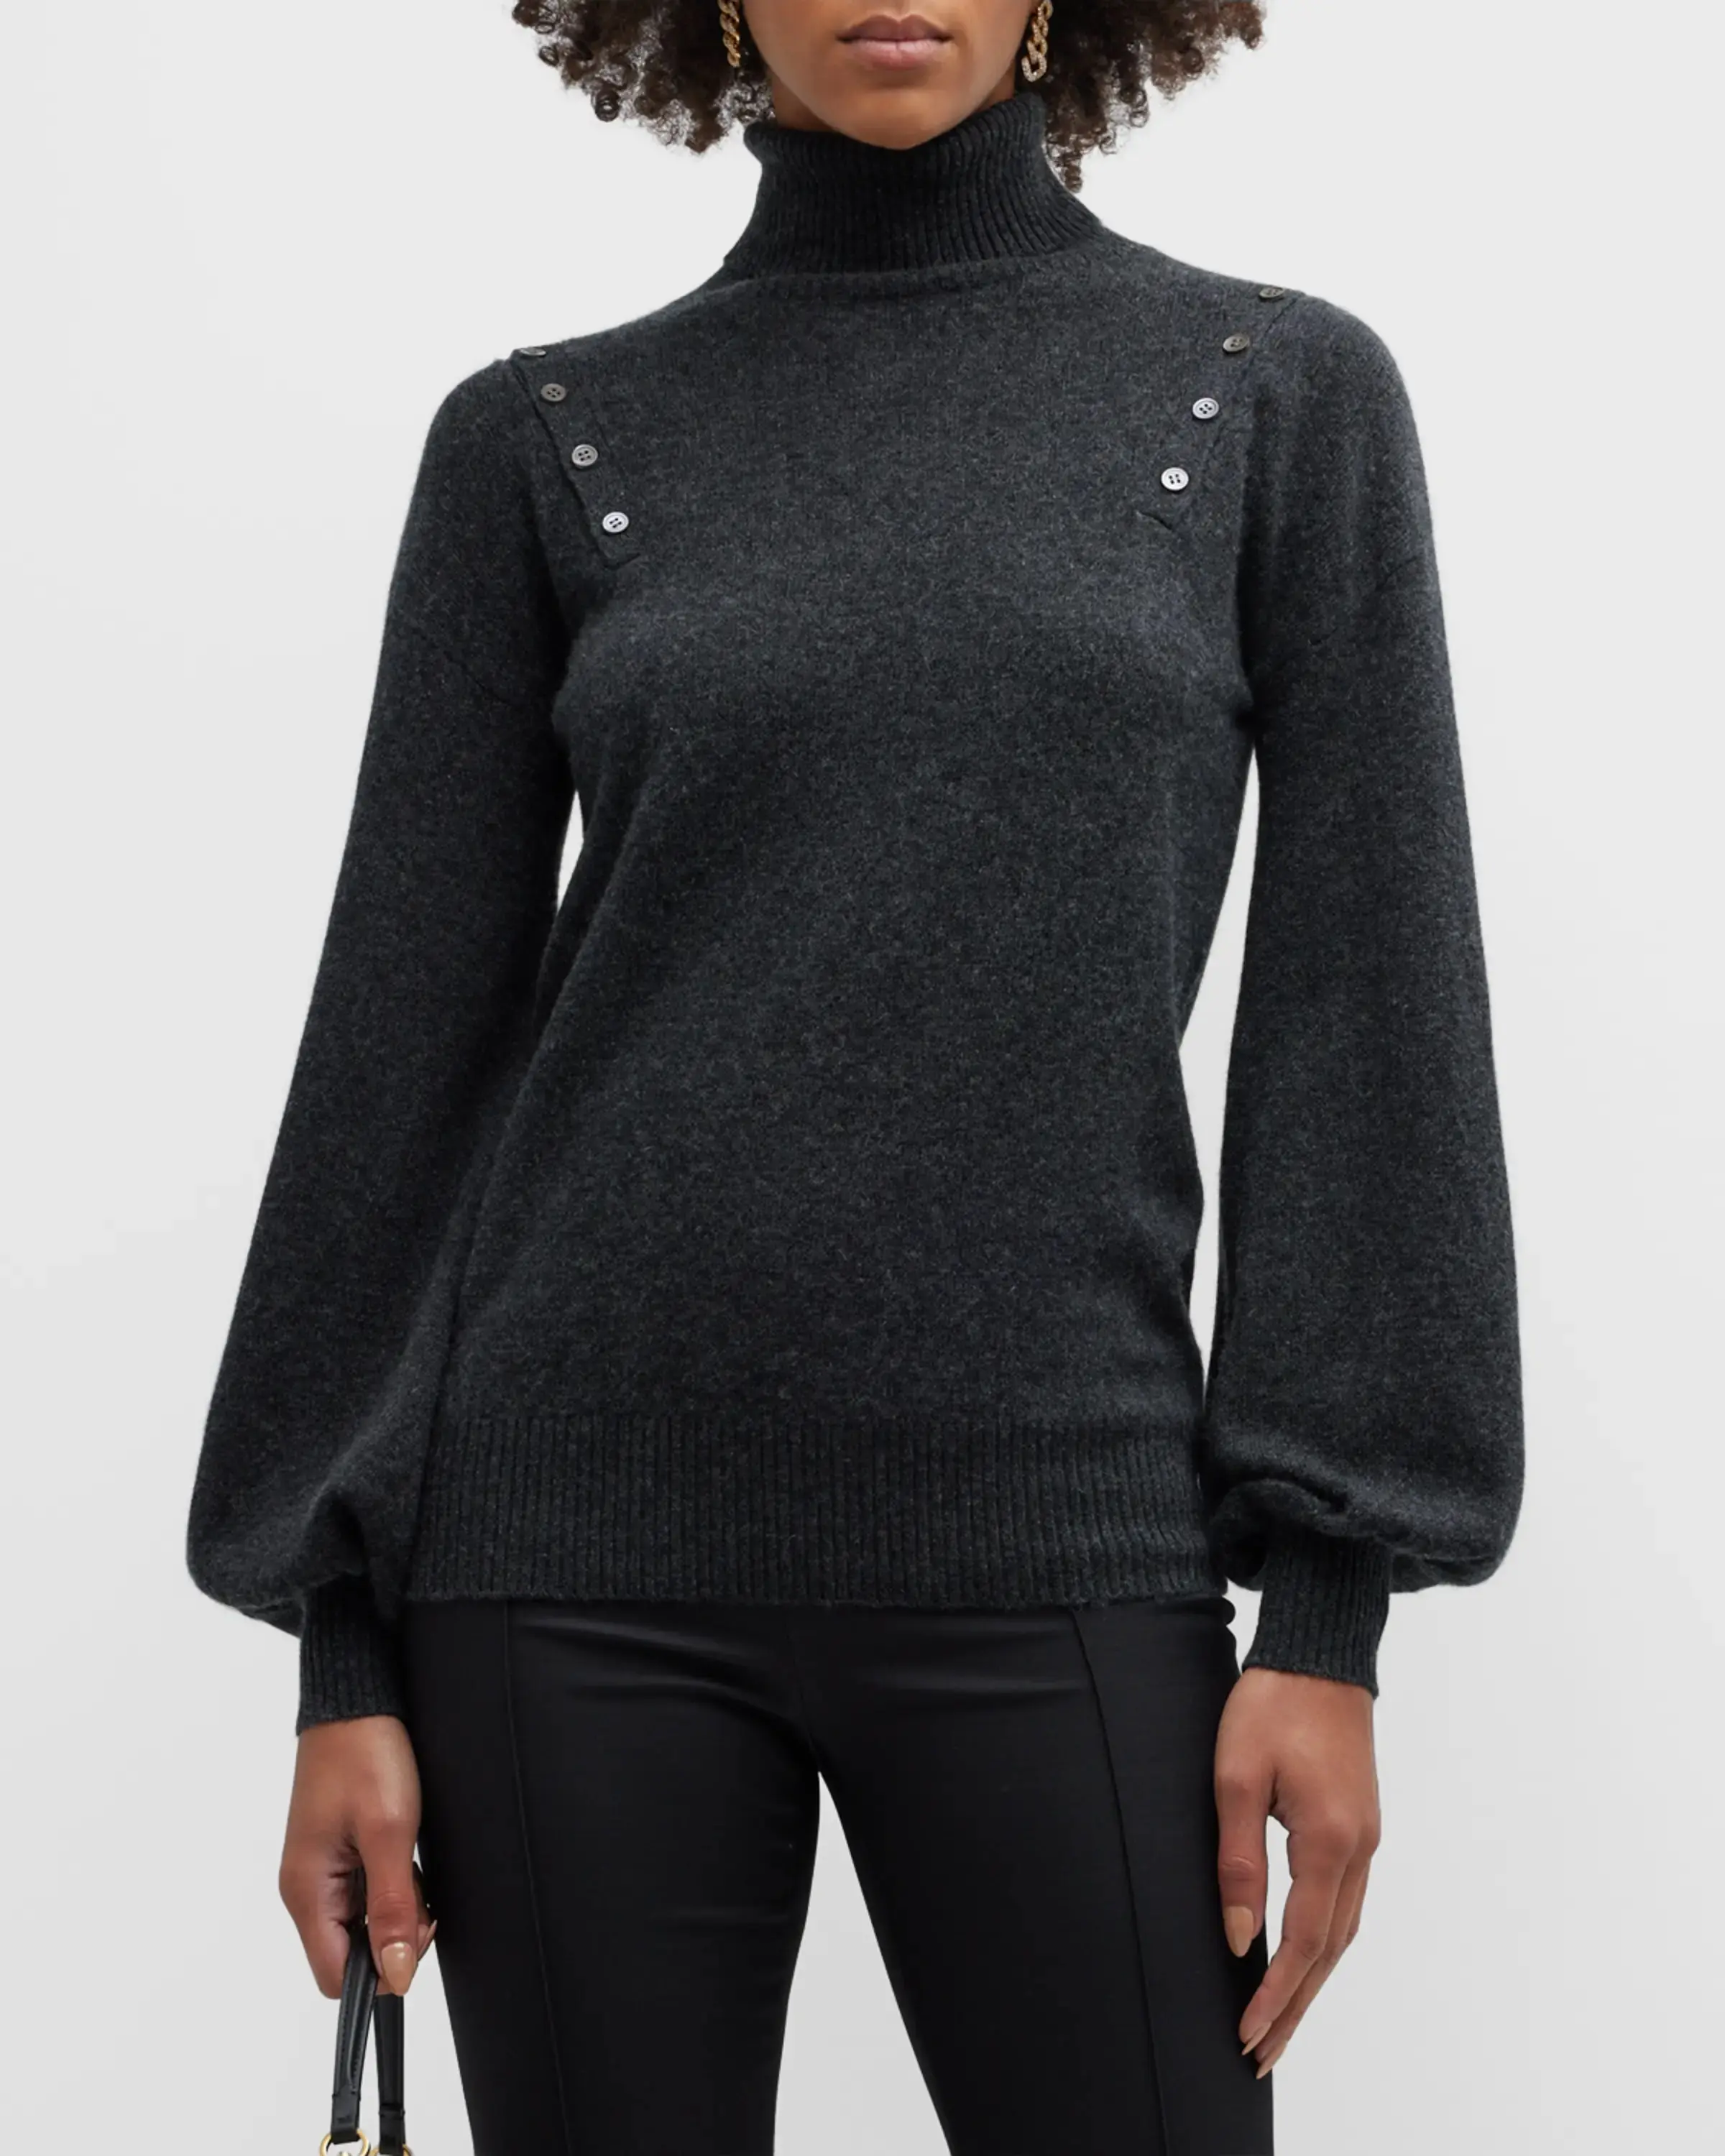 2022 wholesale mongolian winter custom italy women's turtleneck 100% fine cashmere knit pull over sweater blouse